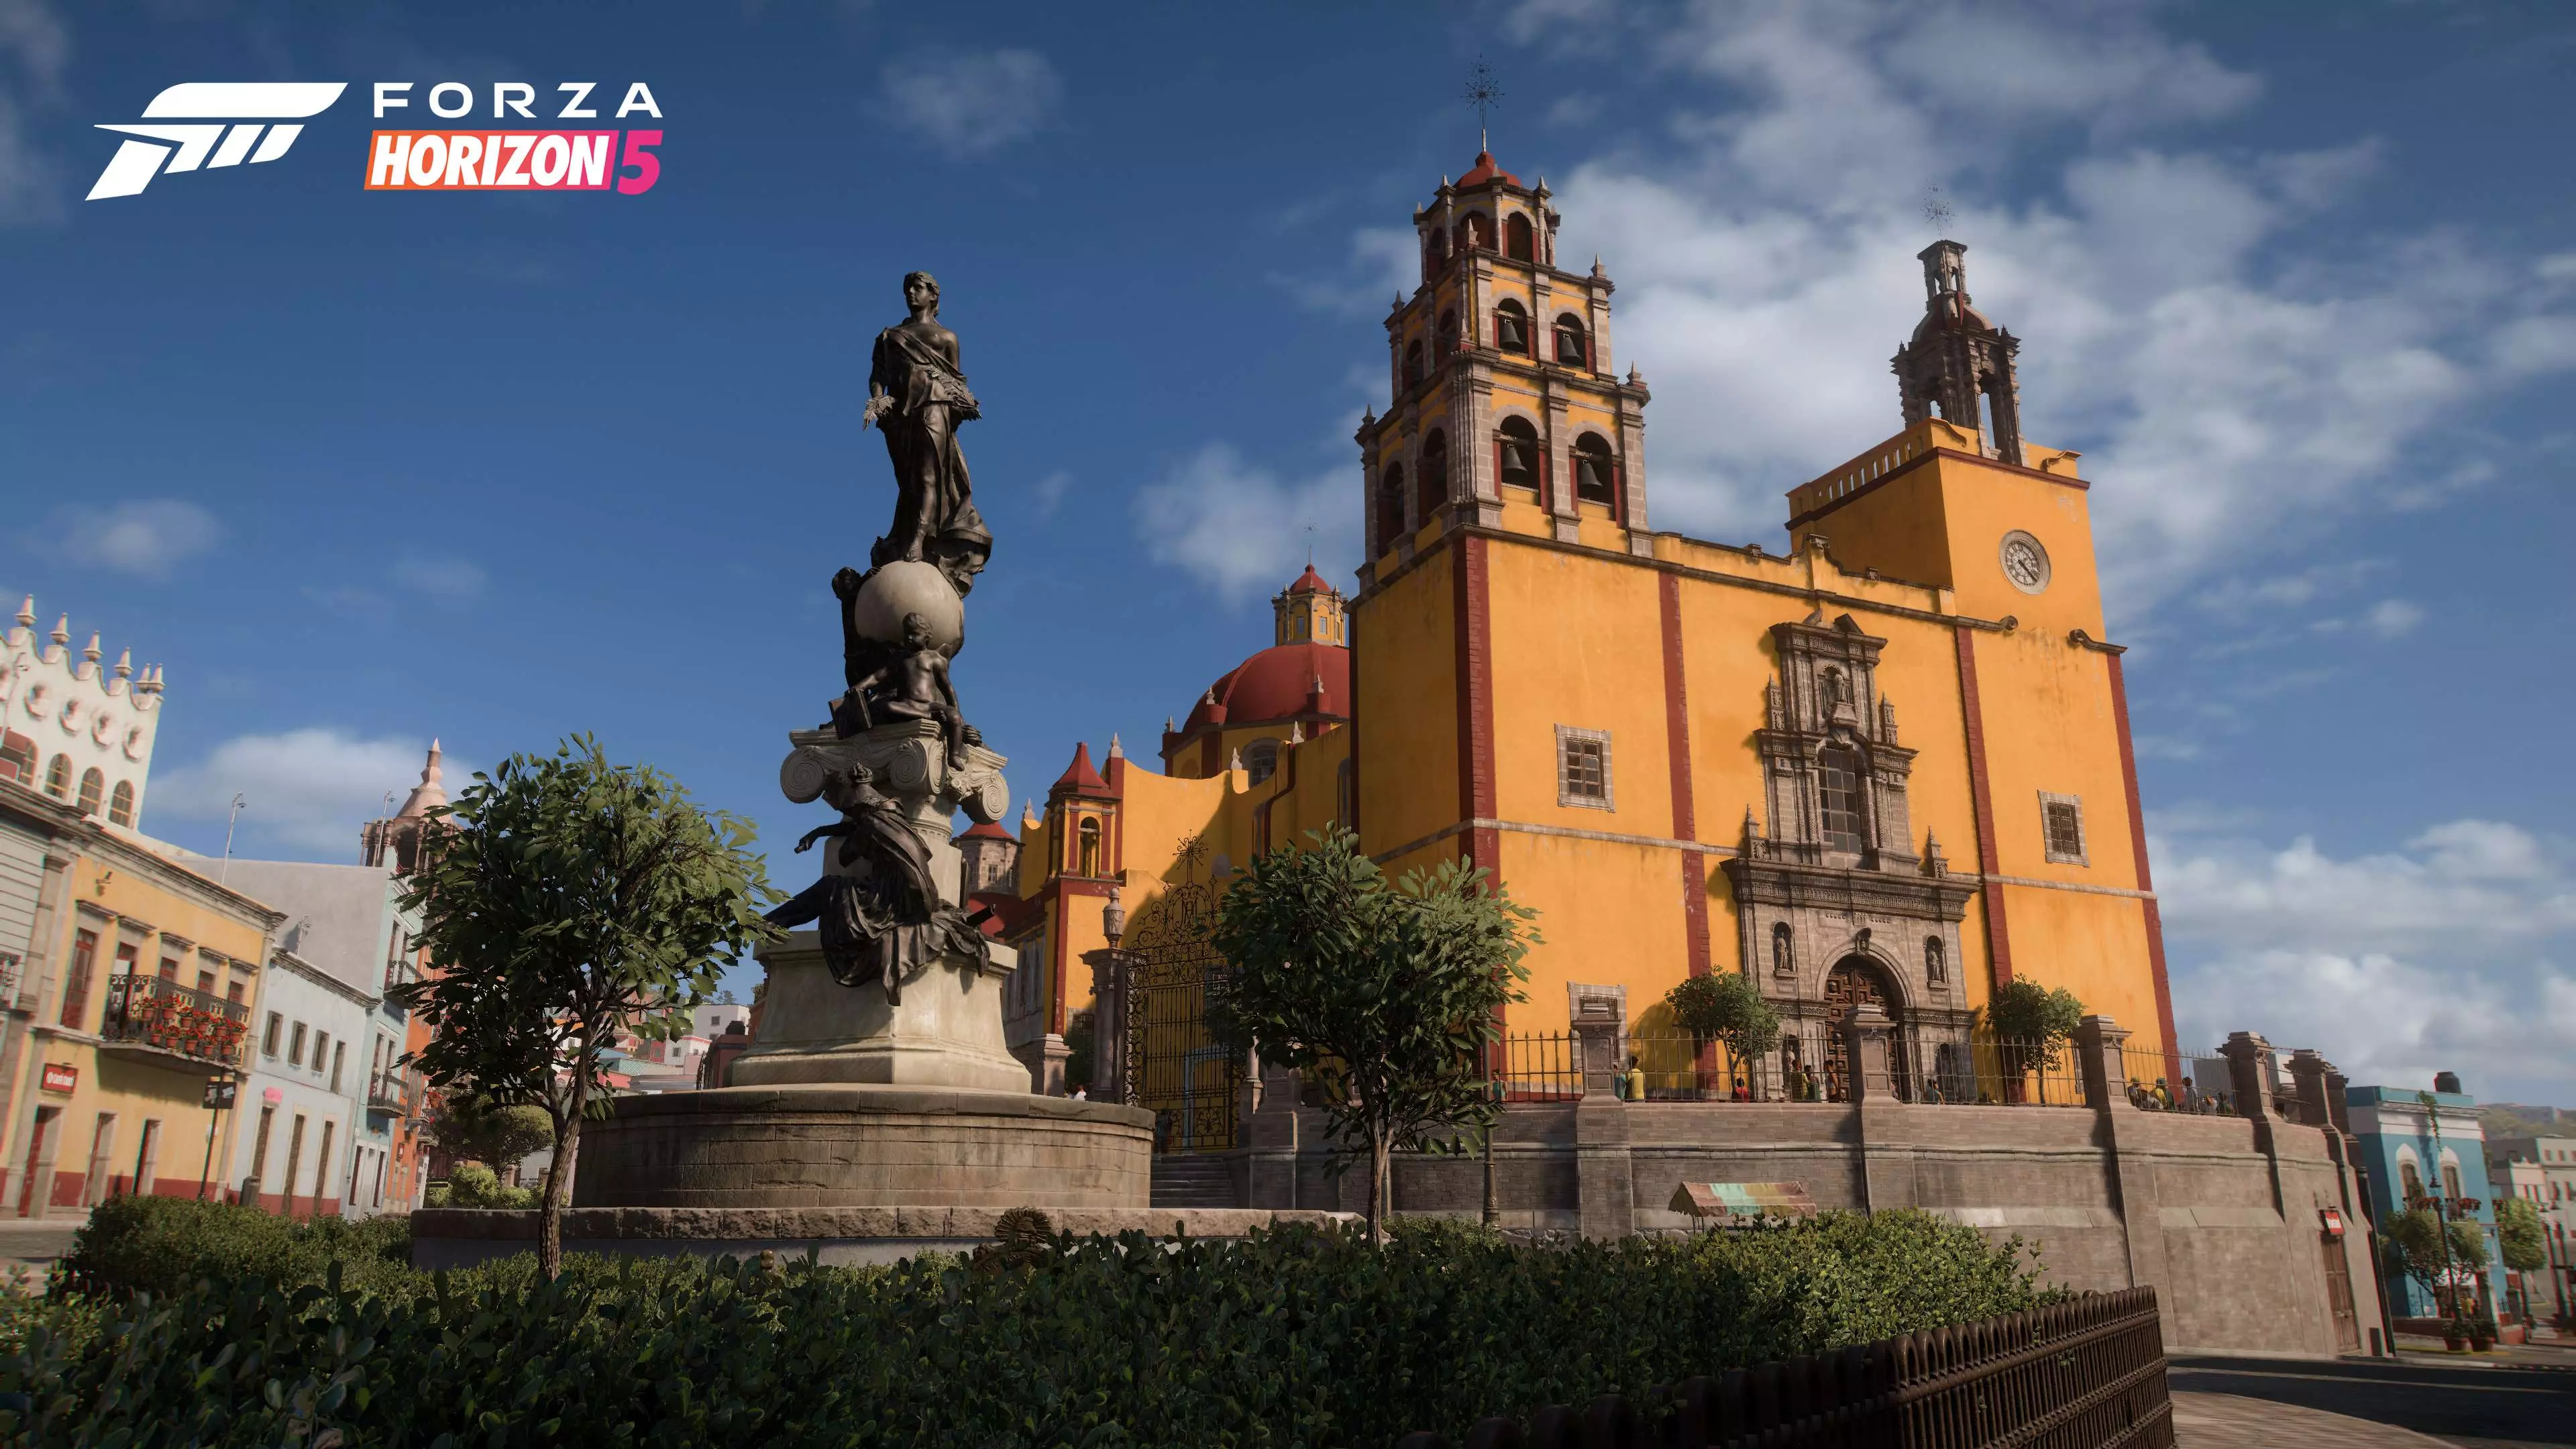 Forza Horizon 5's Urban City of Guanajuato /